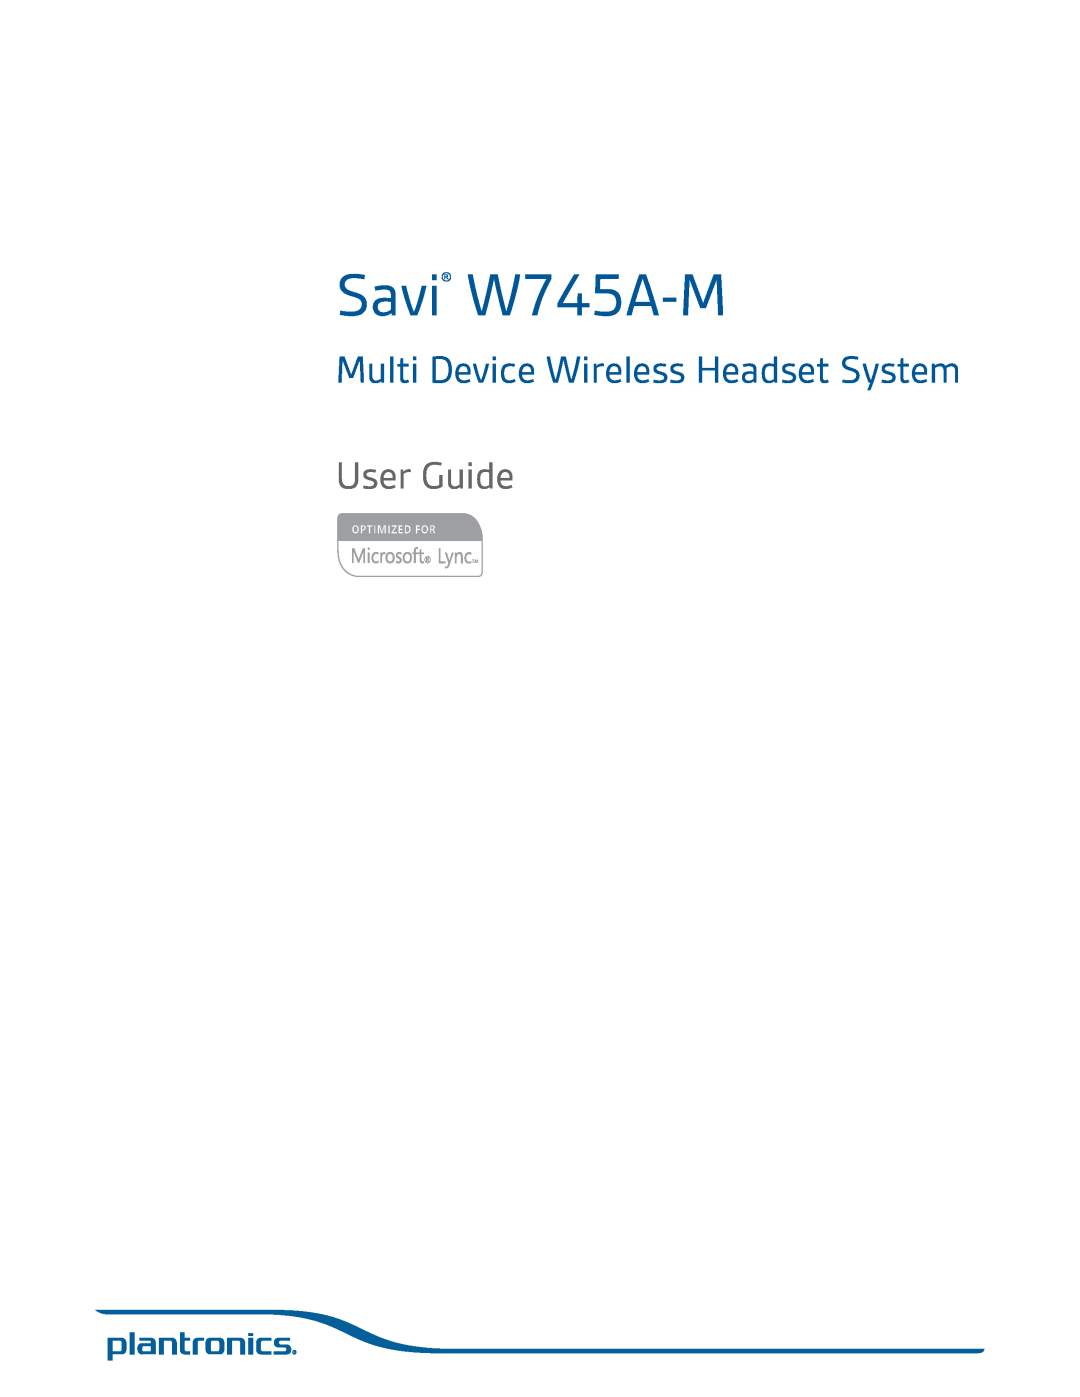 Plantronics manual Savi W745A-M, Multi Device Wireless Headset System, User Guide 